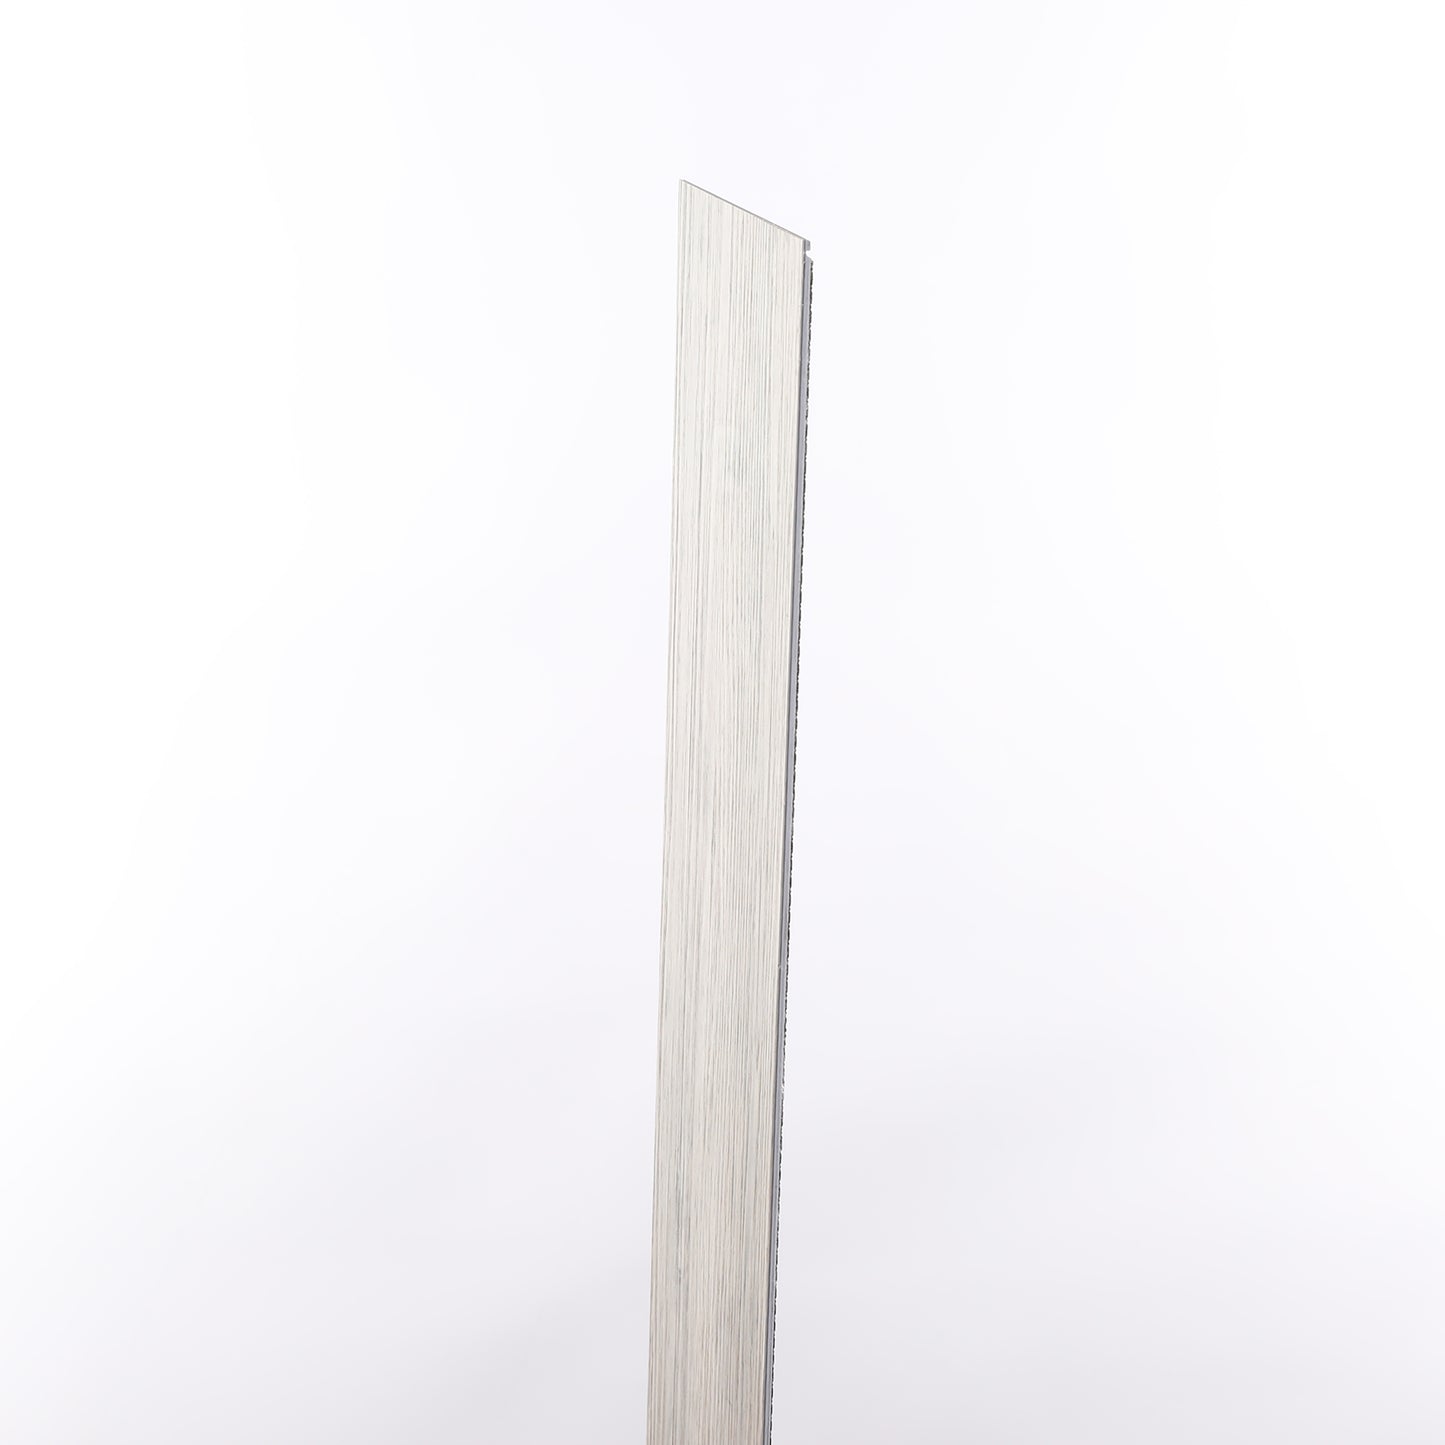 4.5mm Ashen Gray HDPC® Waterproof Luxury Vinyl Plank Flooring 5.91 in. Wide x 48 in. Long